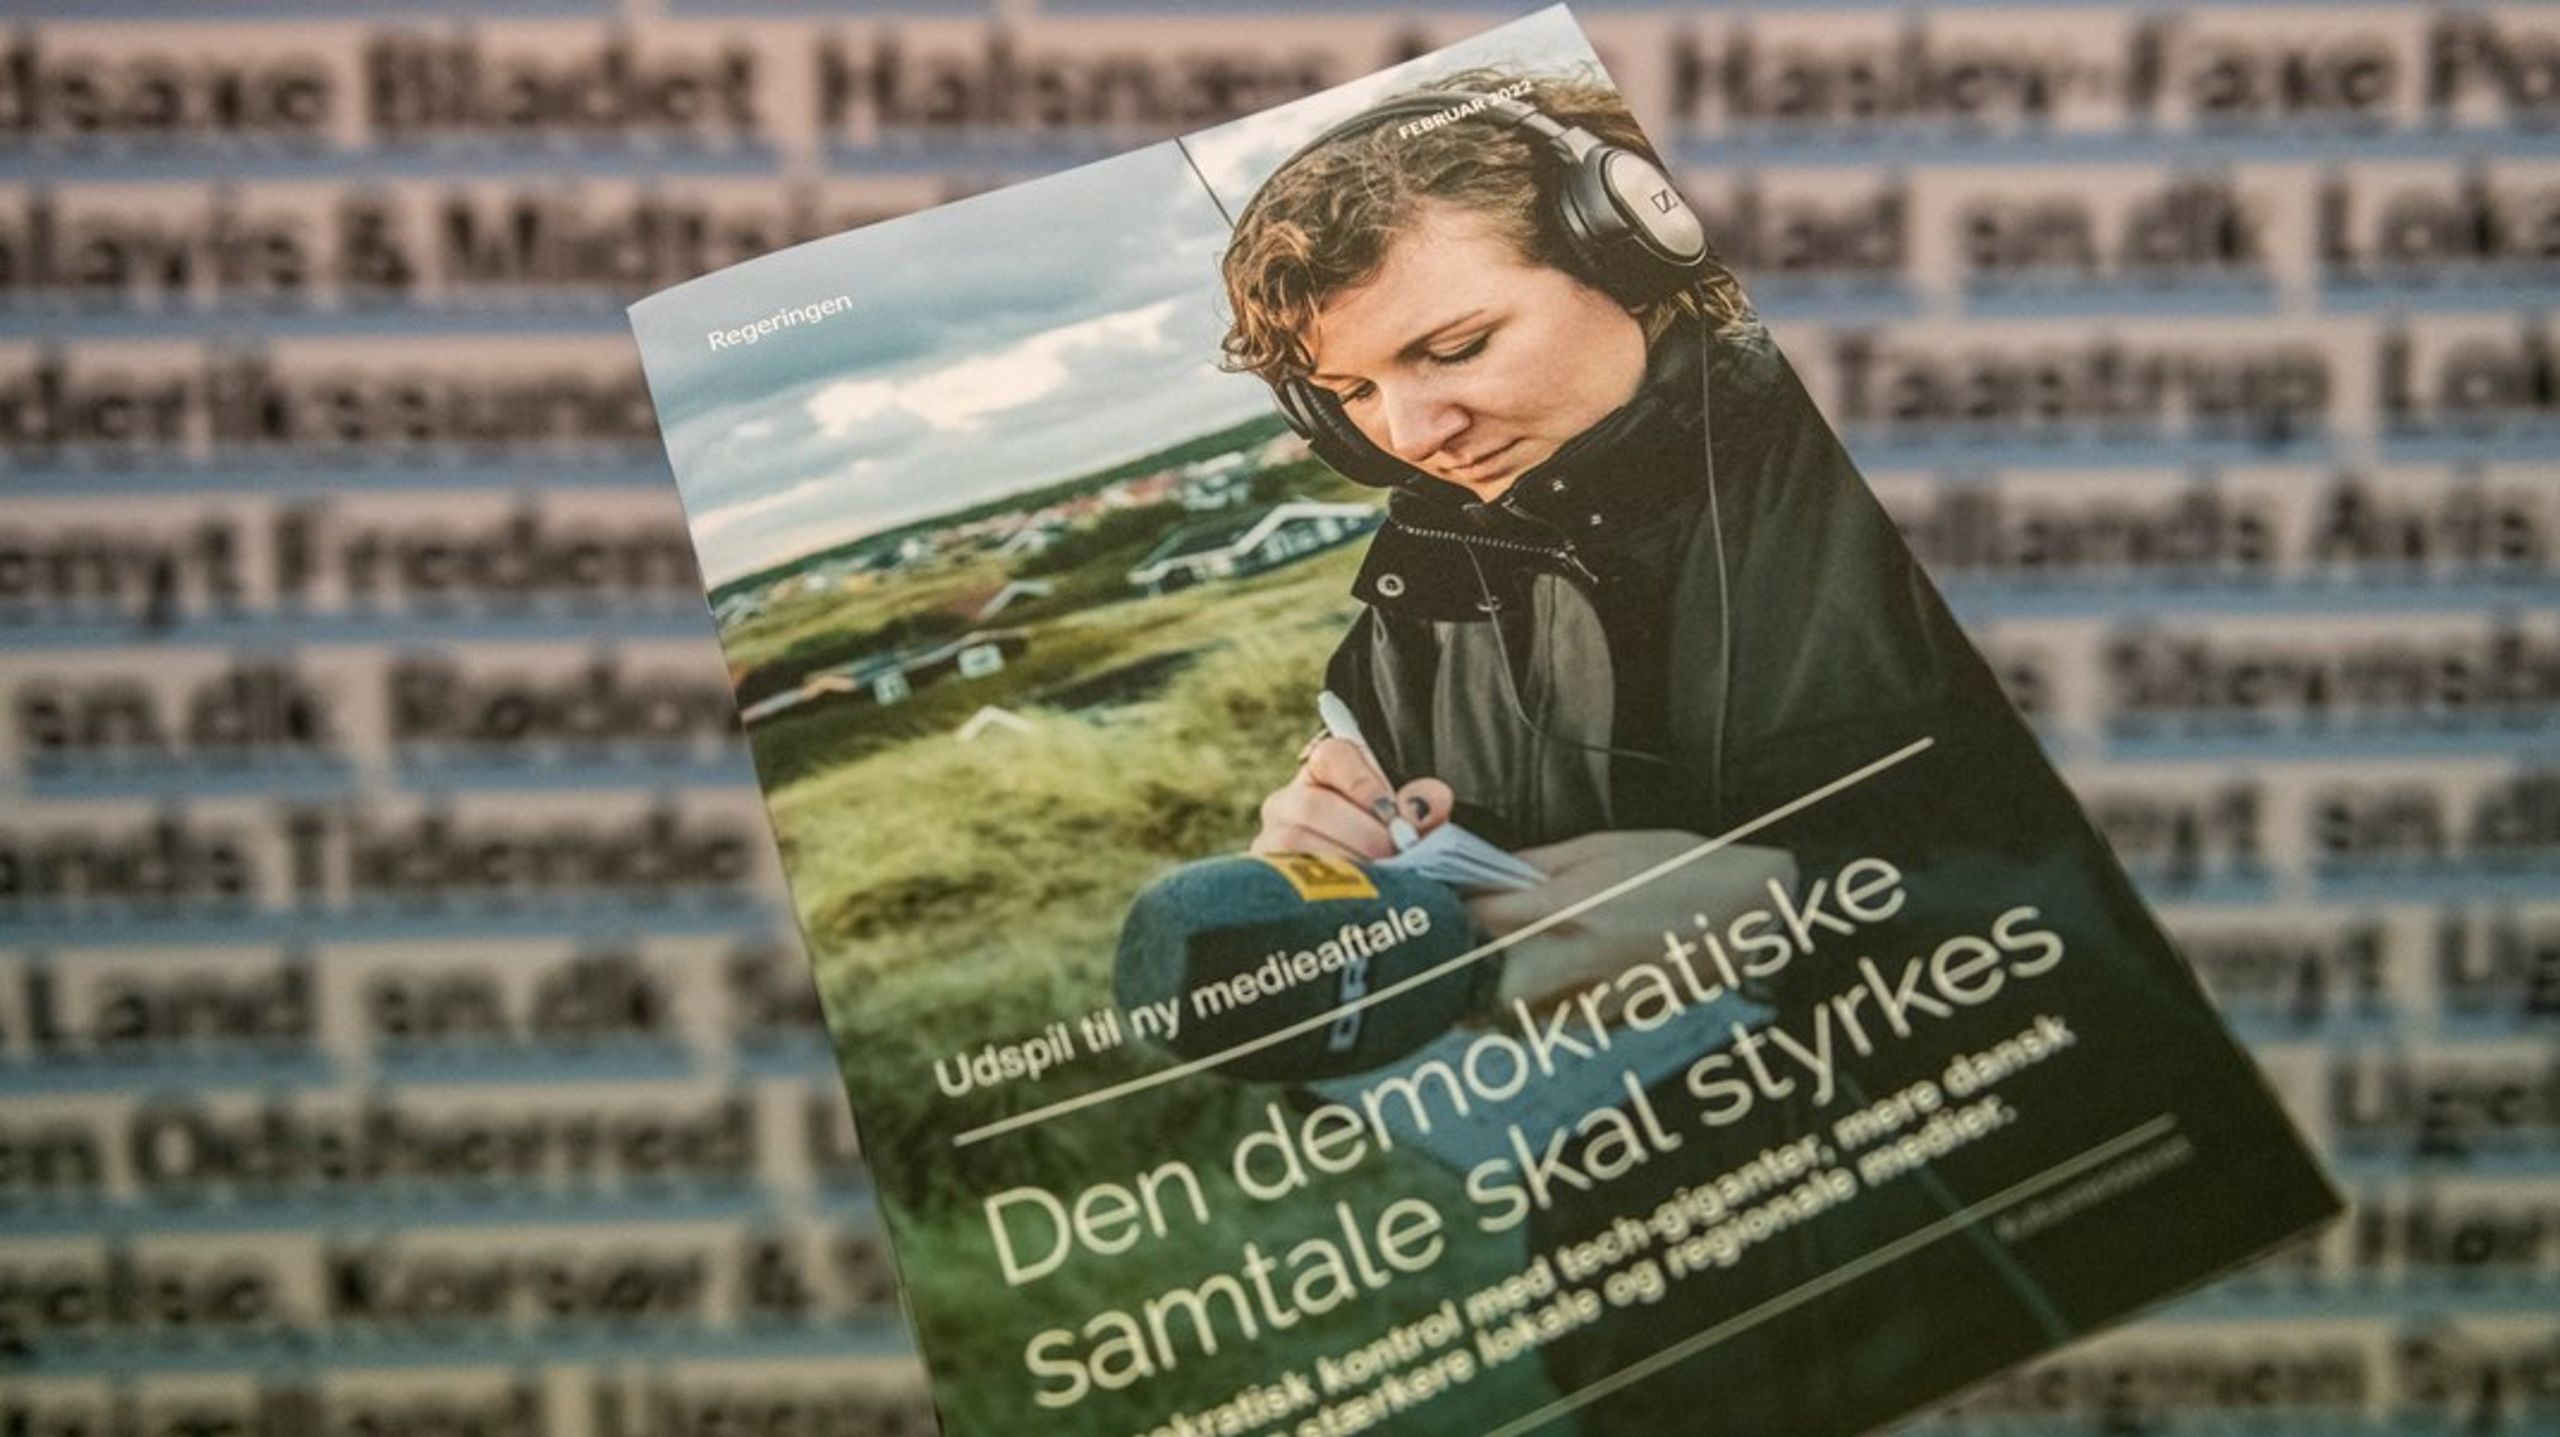 Kulturminister Ane Halsboe-Jørgensen (S) præsenterede 21. maj det nye medieforlig med titlen "Den demokratiske samtale skal styrkes"